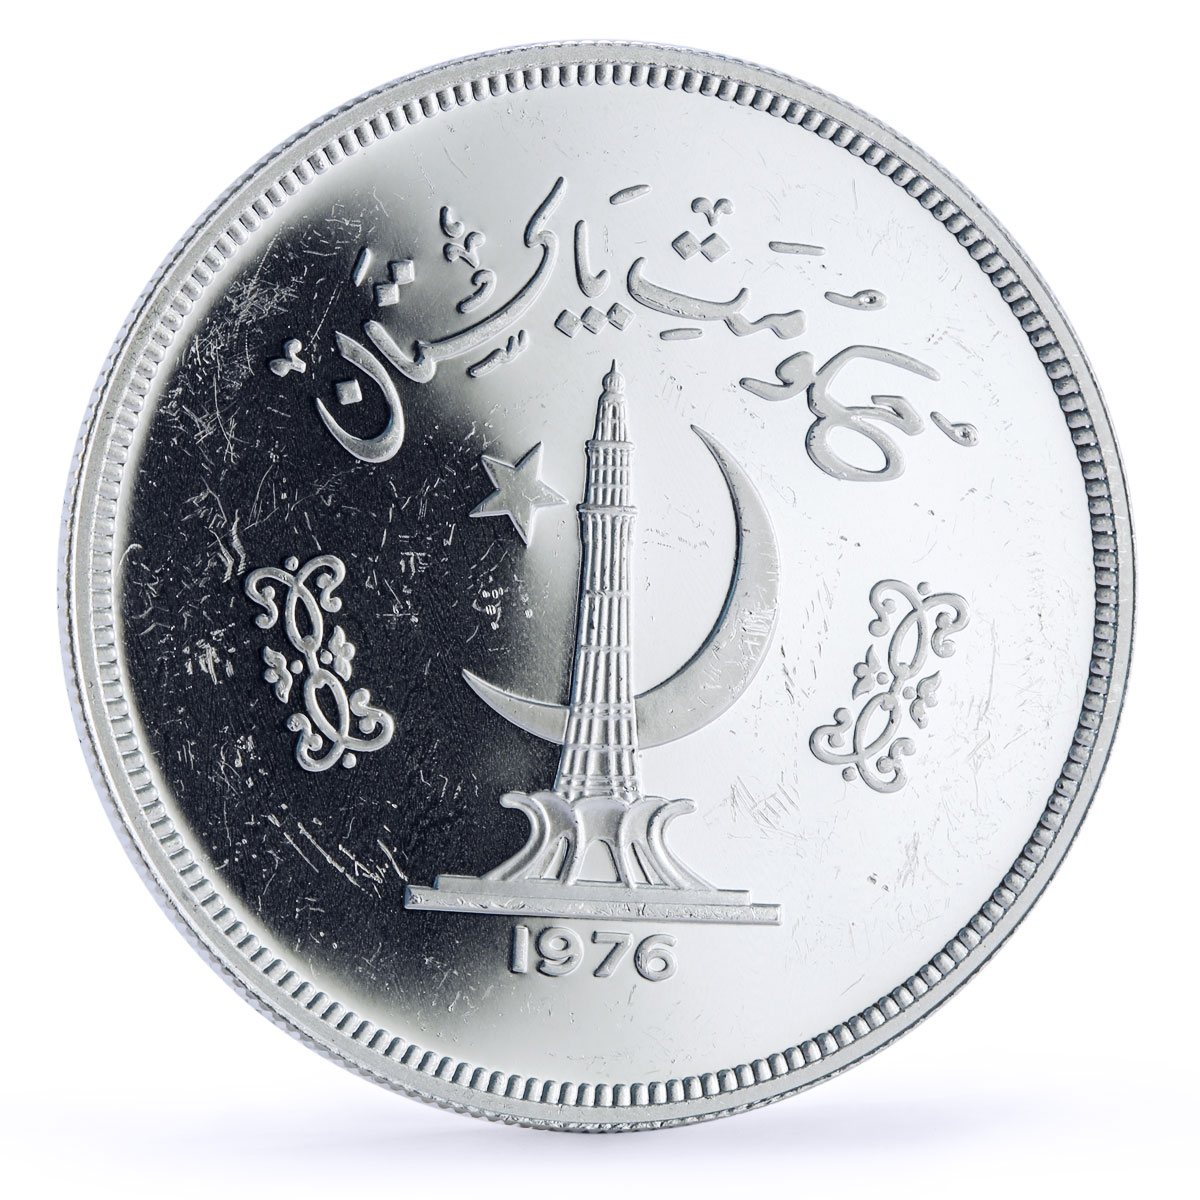 Pakistan 150 rupees WWF Gavial Crocodile Fauna proof silver coin 1976